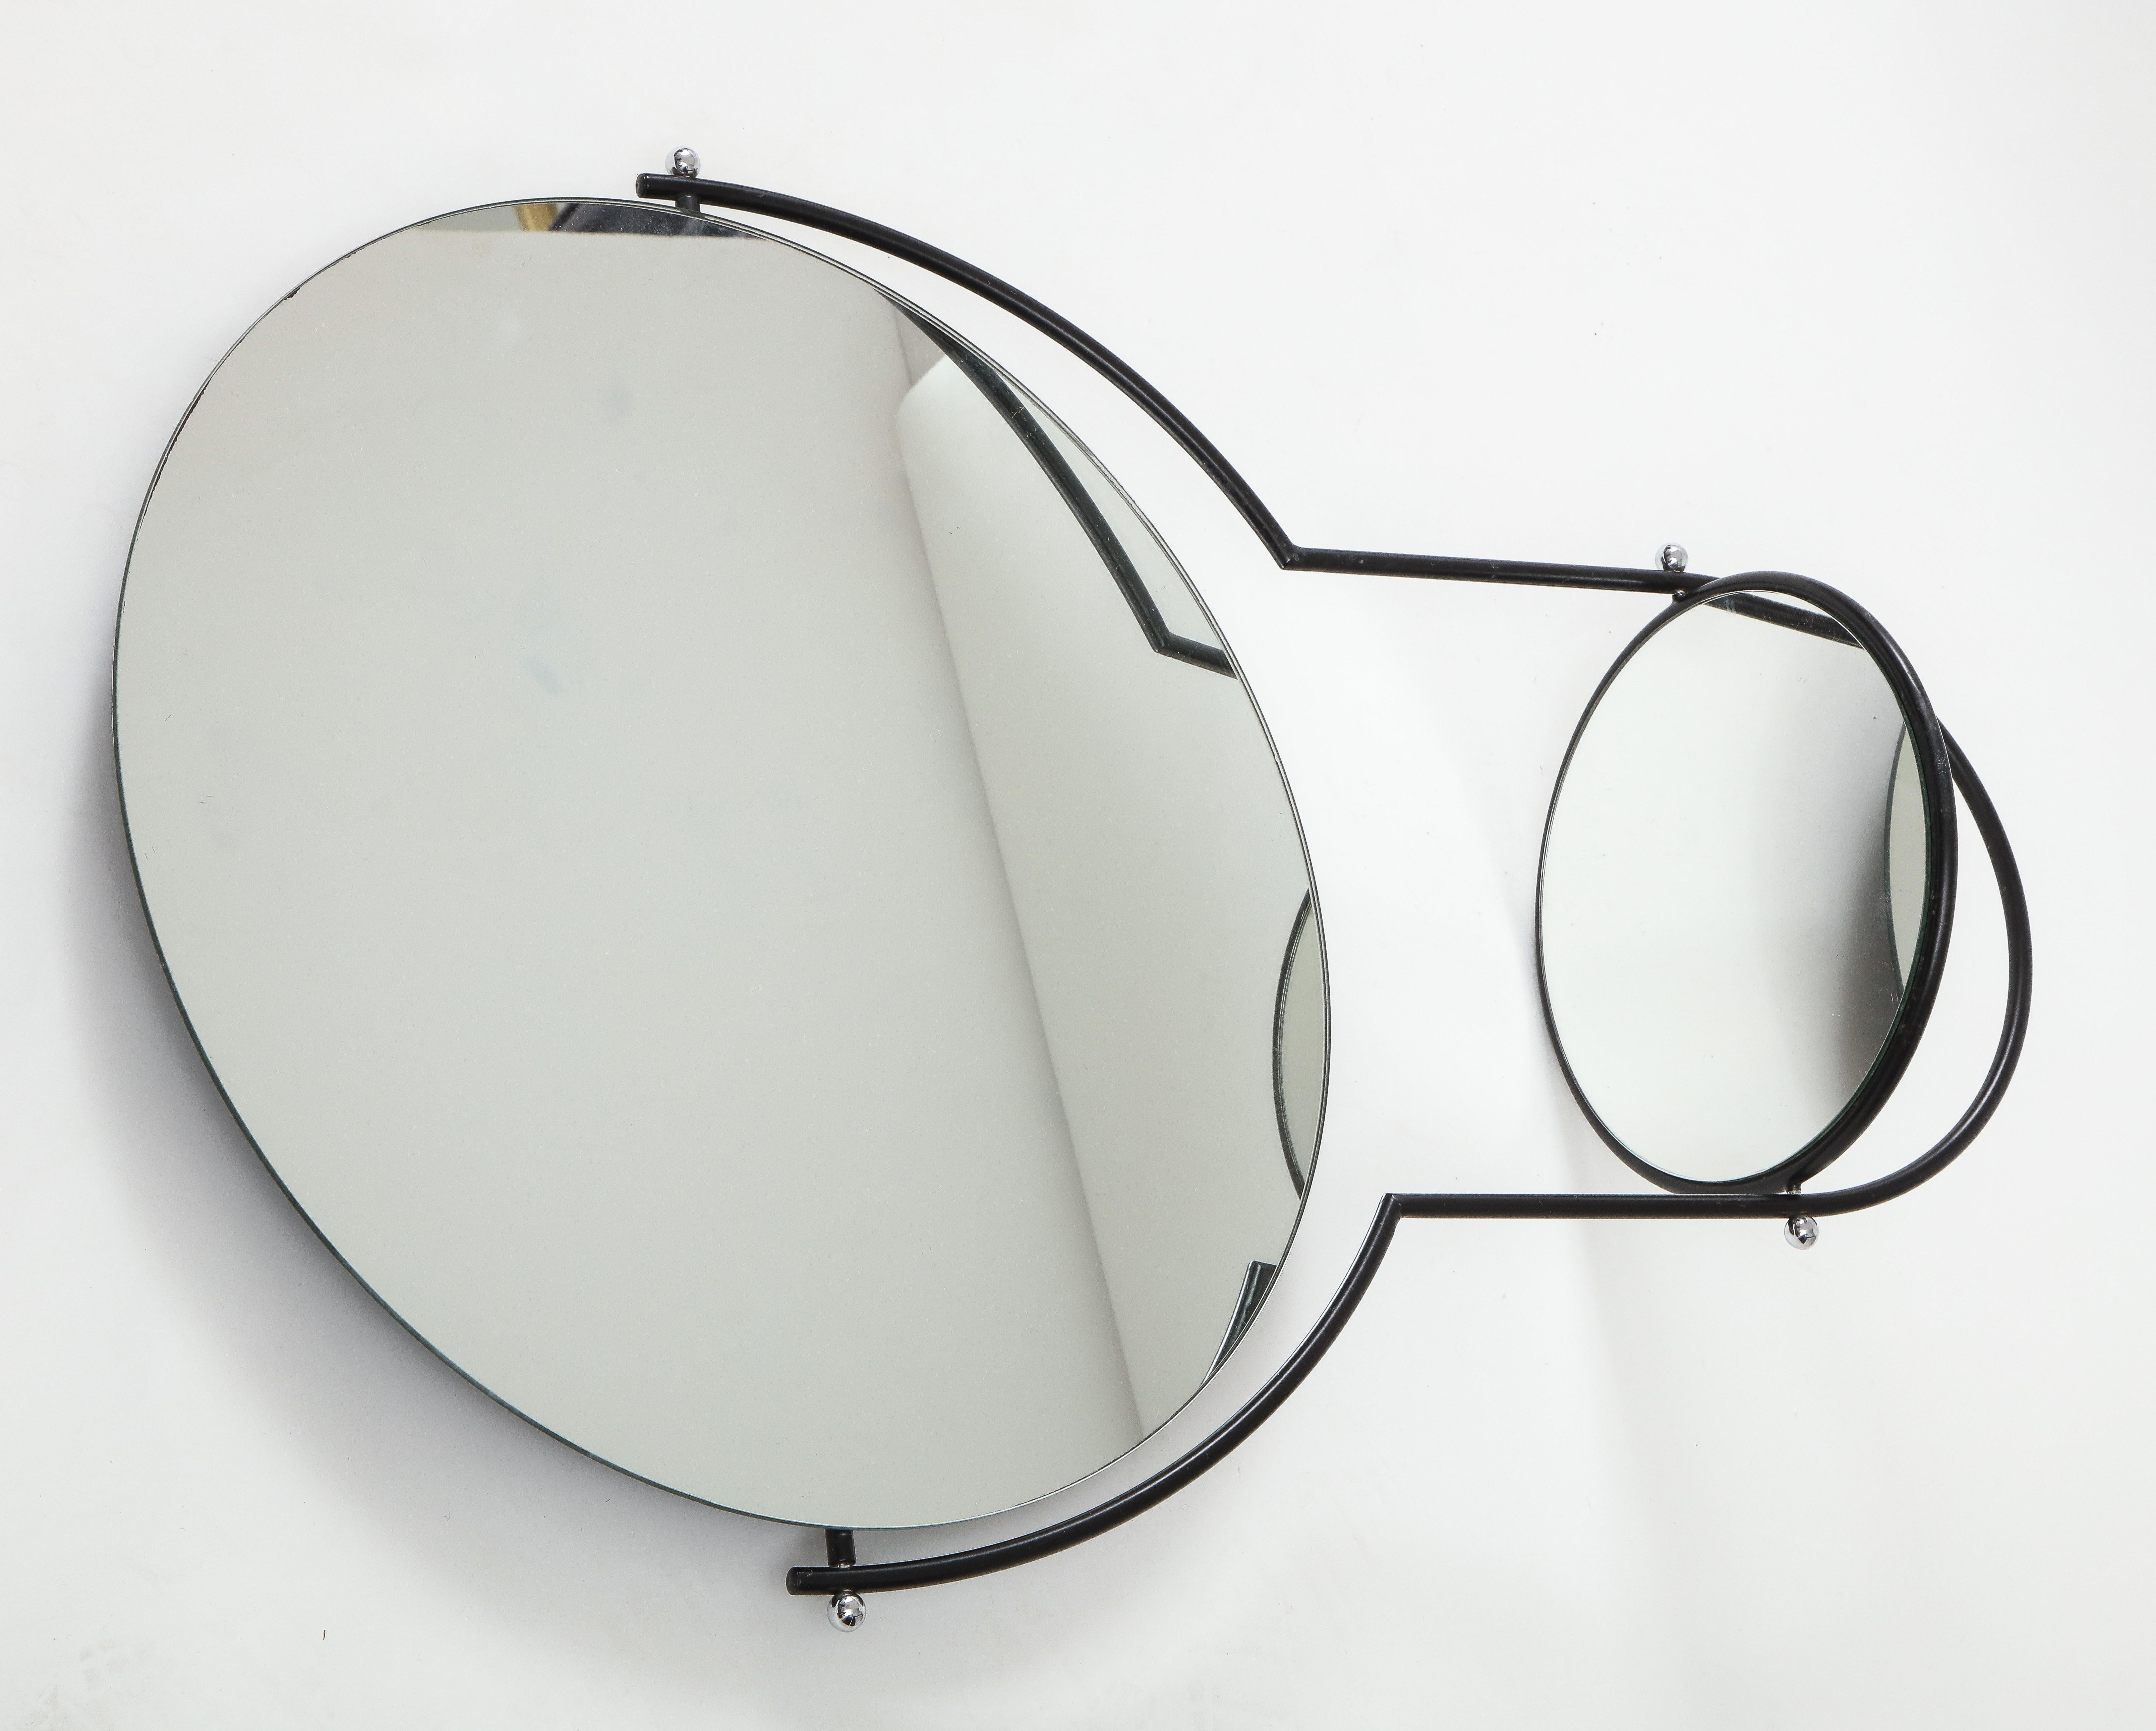 Steel Modernist 'Orbit' Wall Mirror by Rodney Kinsman for Bieffeplast